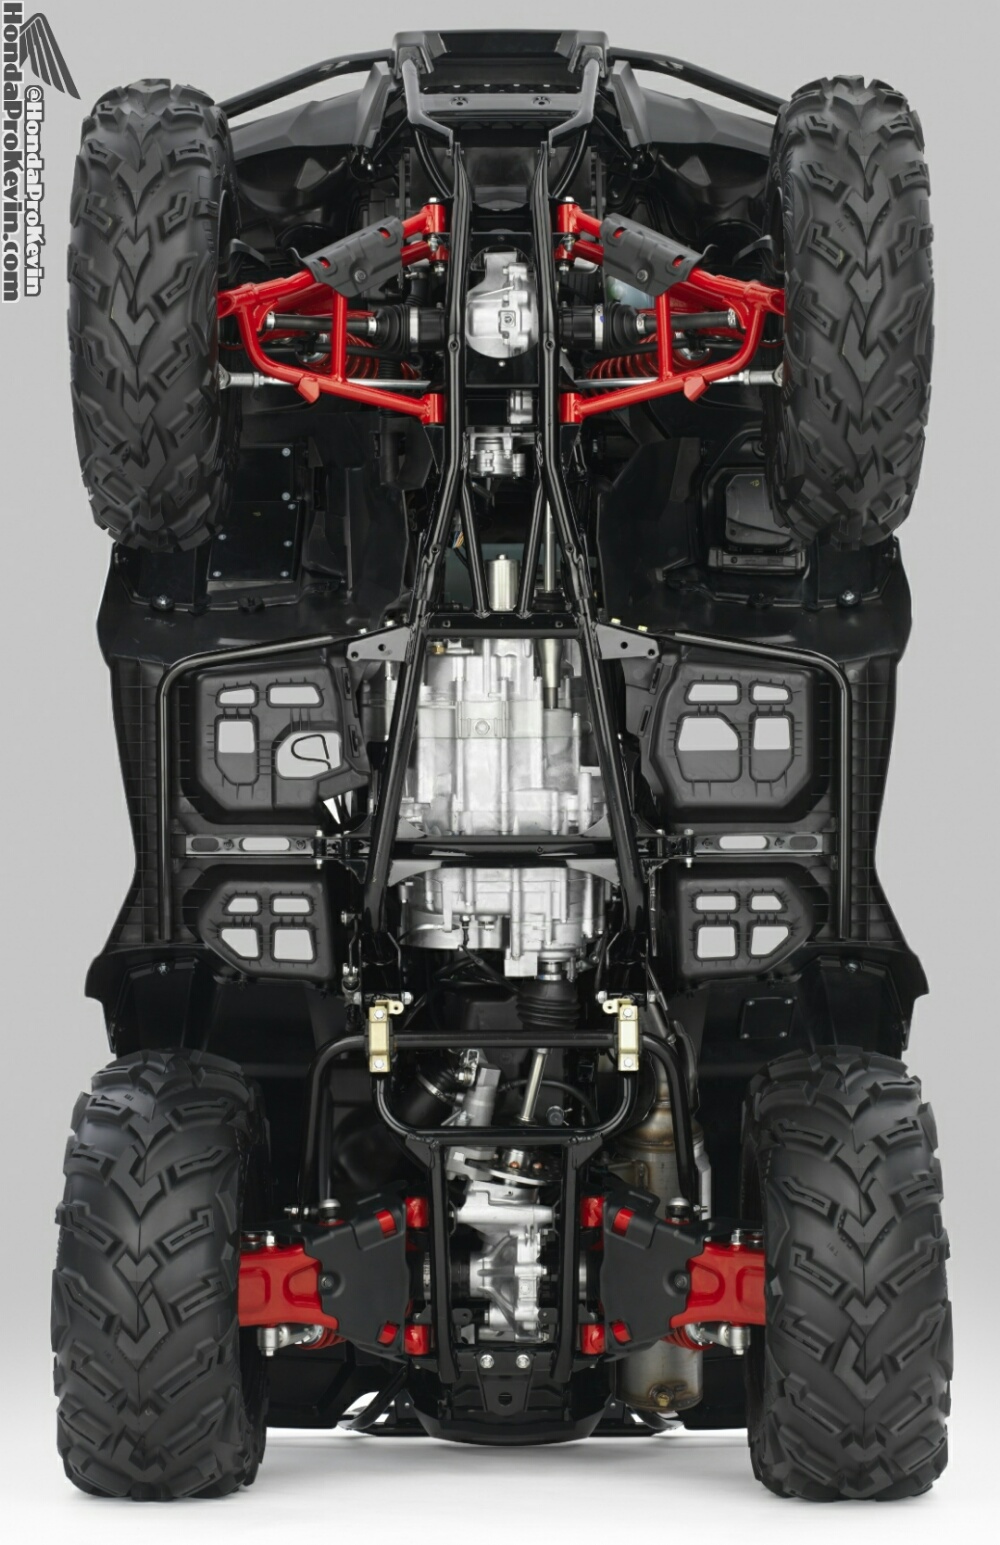 2022 Honda Foreman Rubicon 520 ATV Skid Plates / Guards - TRX500 Review of Specs